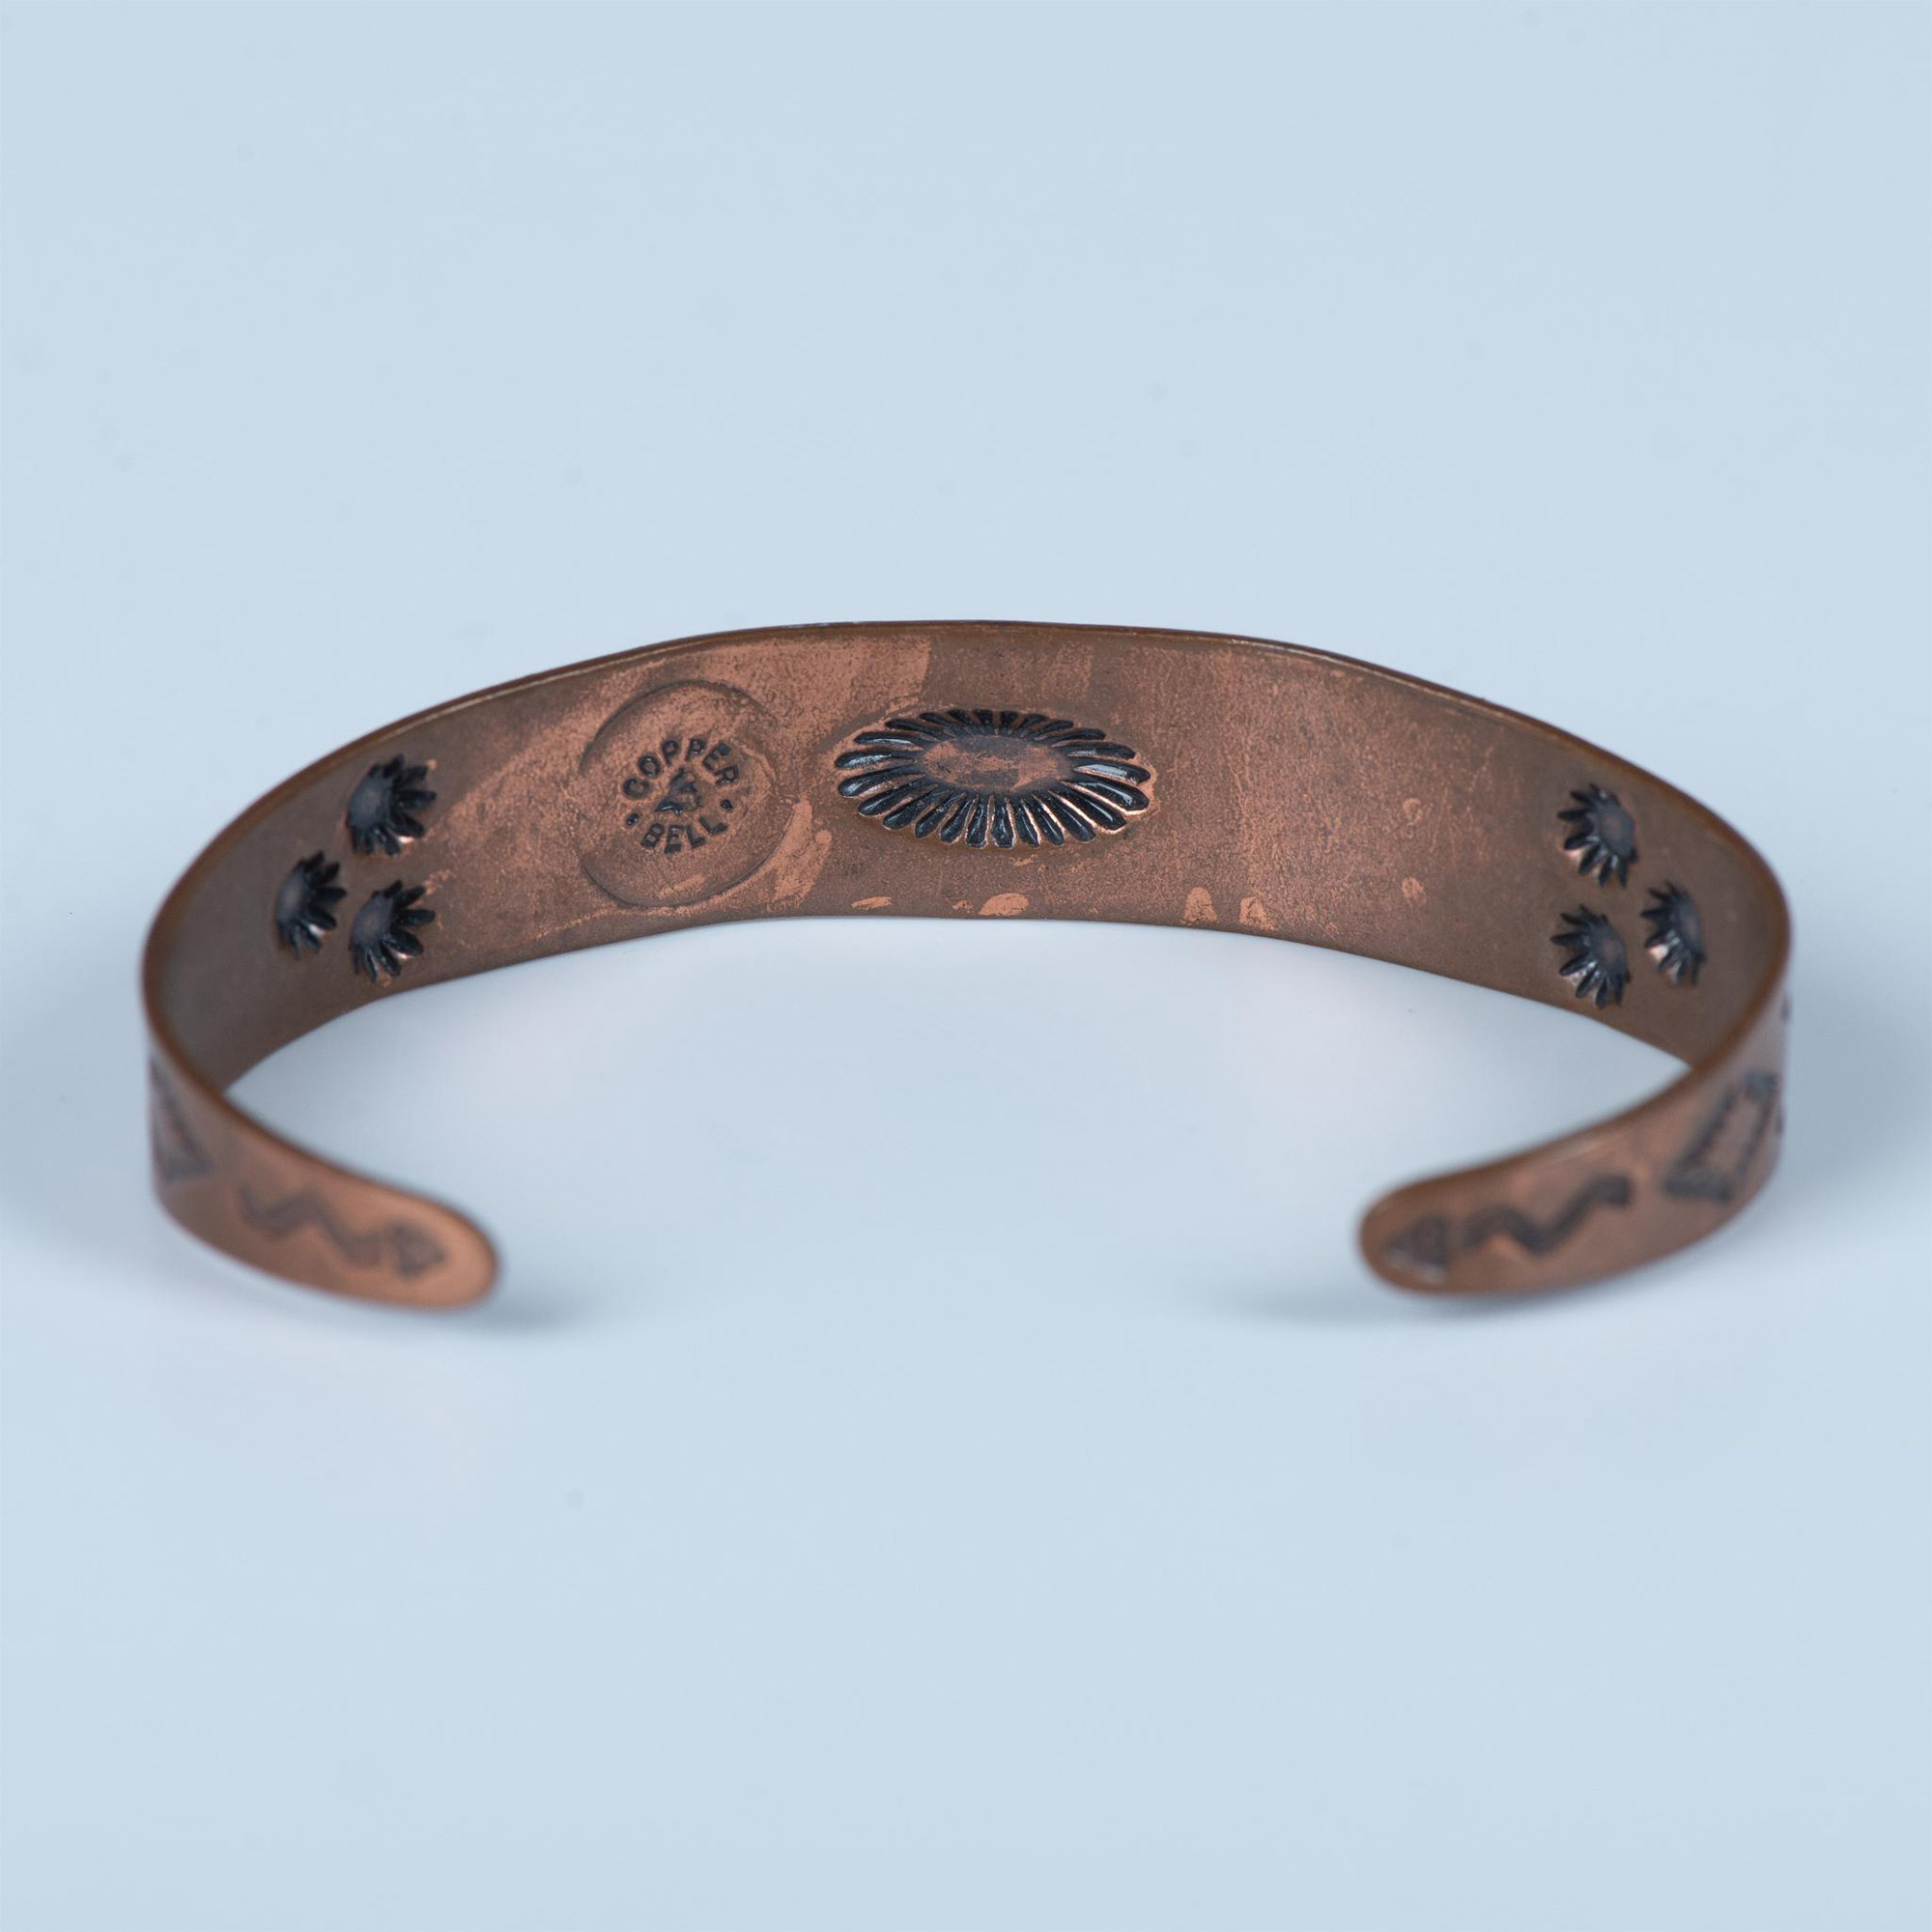 Native American Tribal Thunderbird Copper Cuff Bracelet - Image 3 of 4